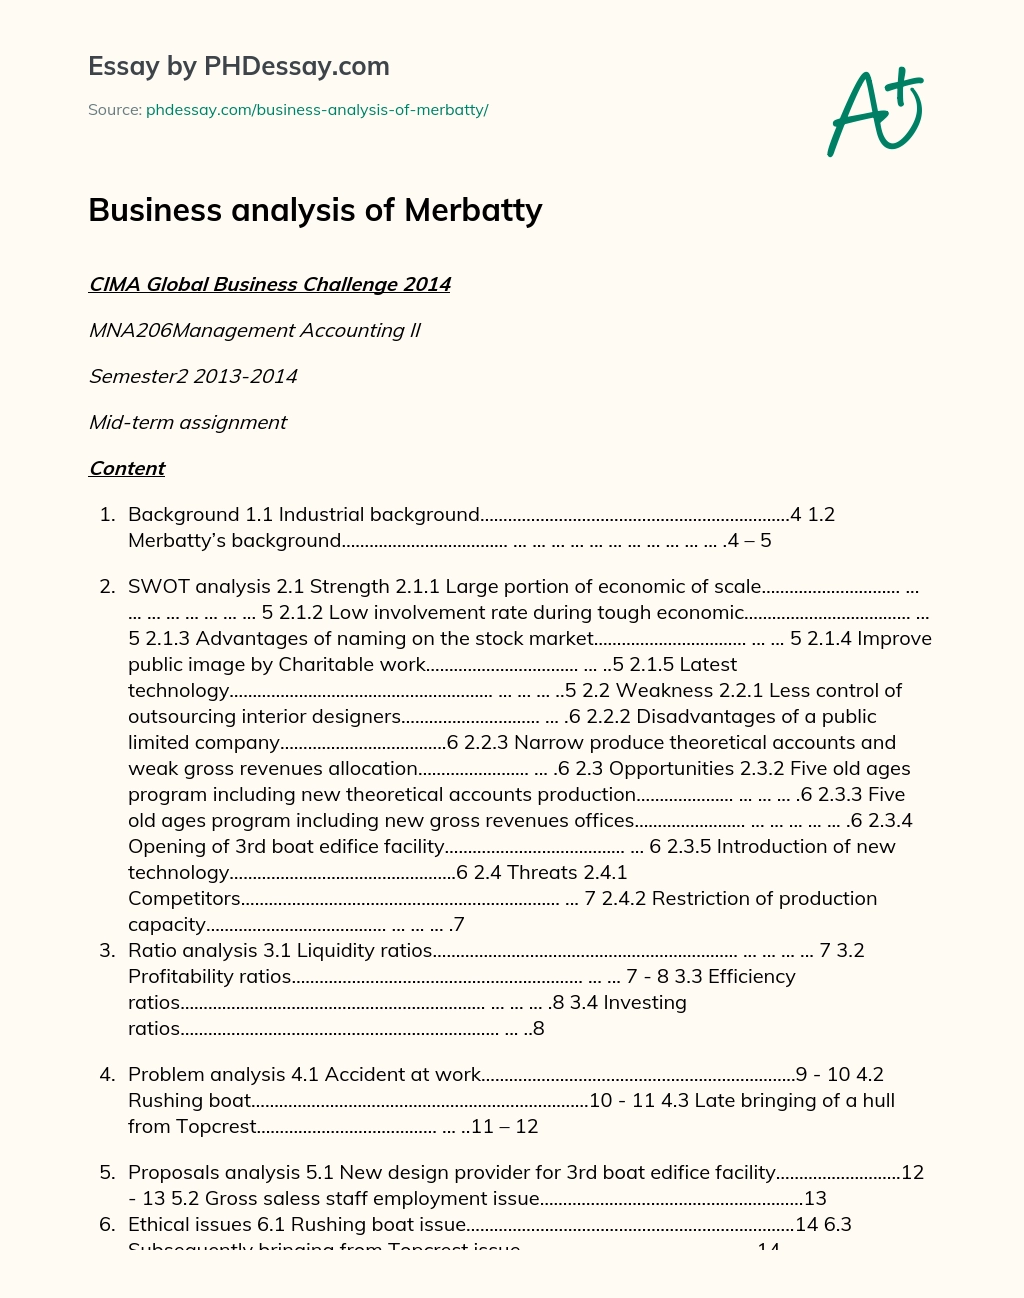 Business analysis of Merbatty essay